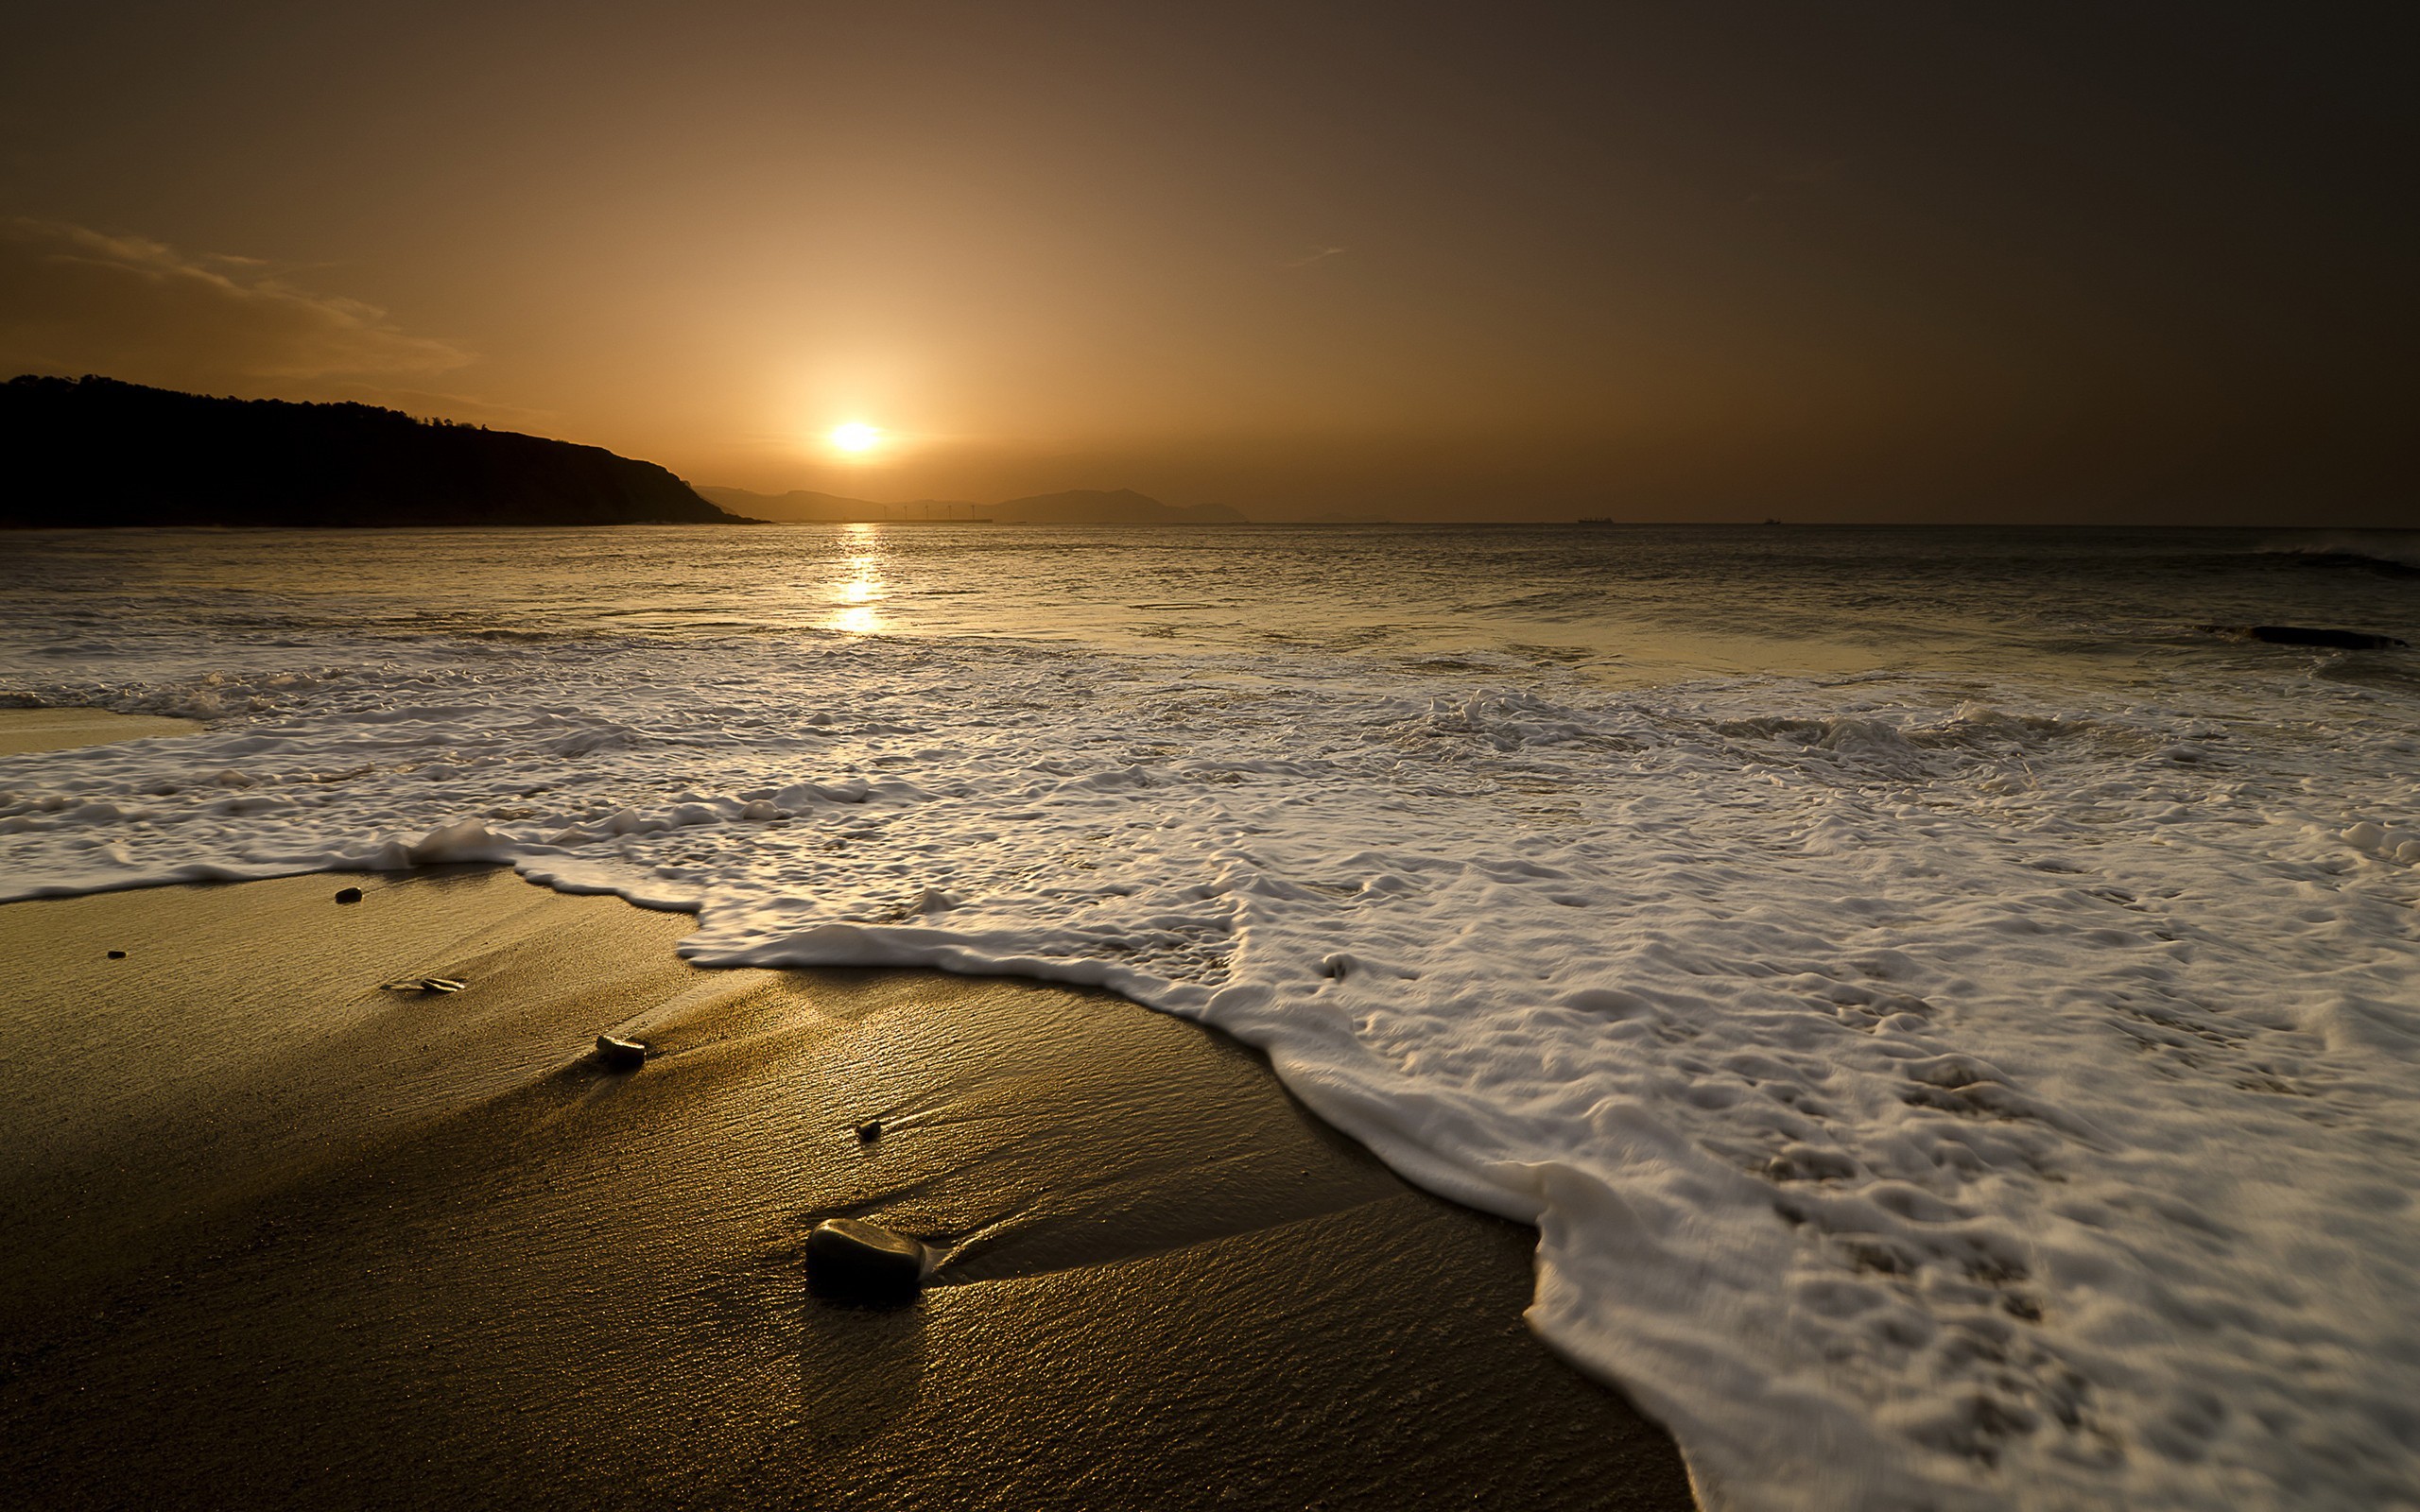 General 2560x1600 beach sea sand sunlight silhouette landscape nature Sun